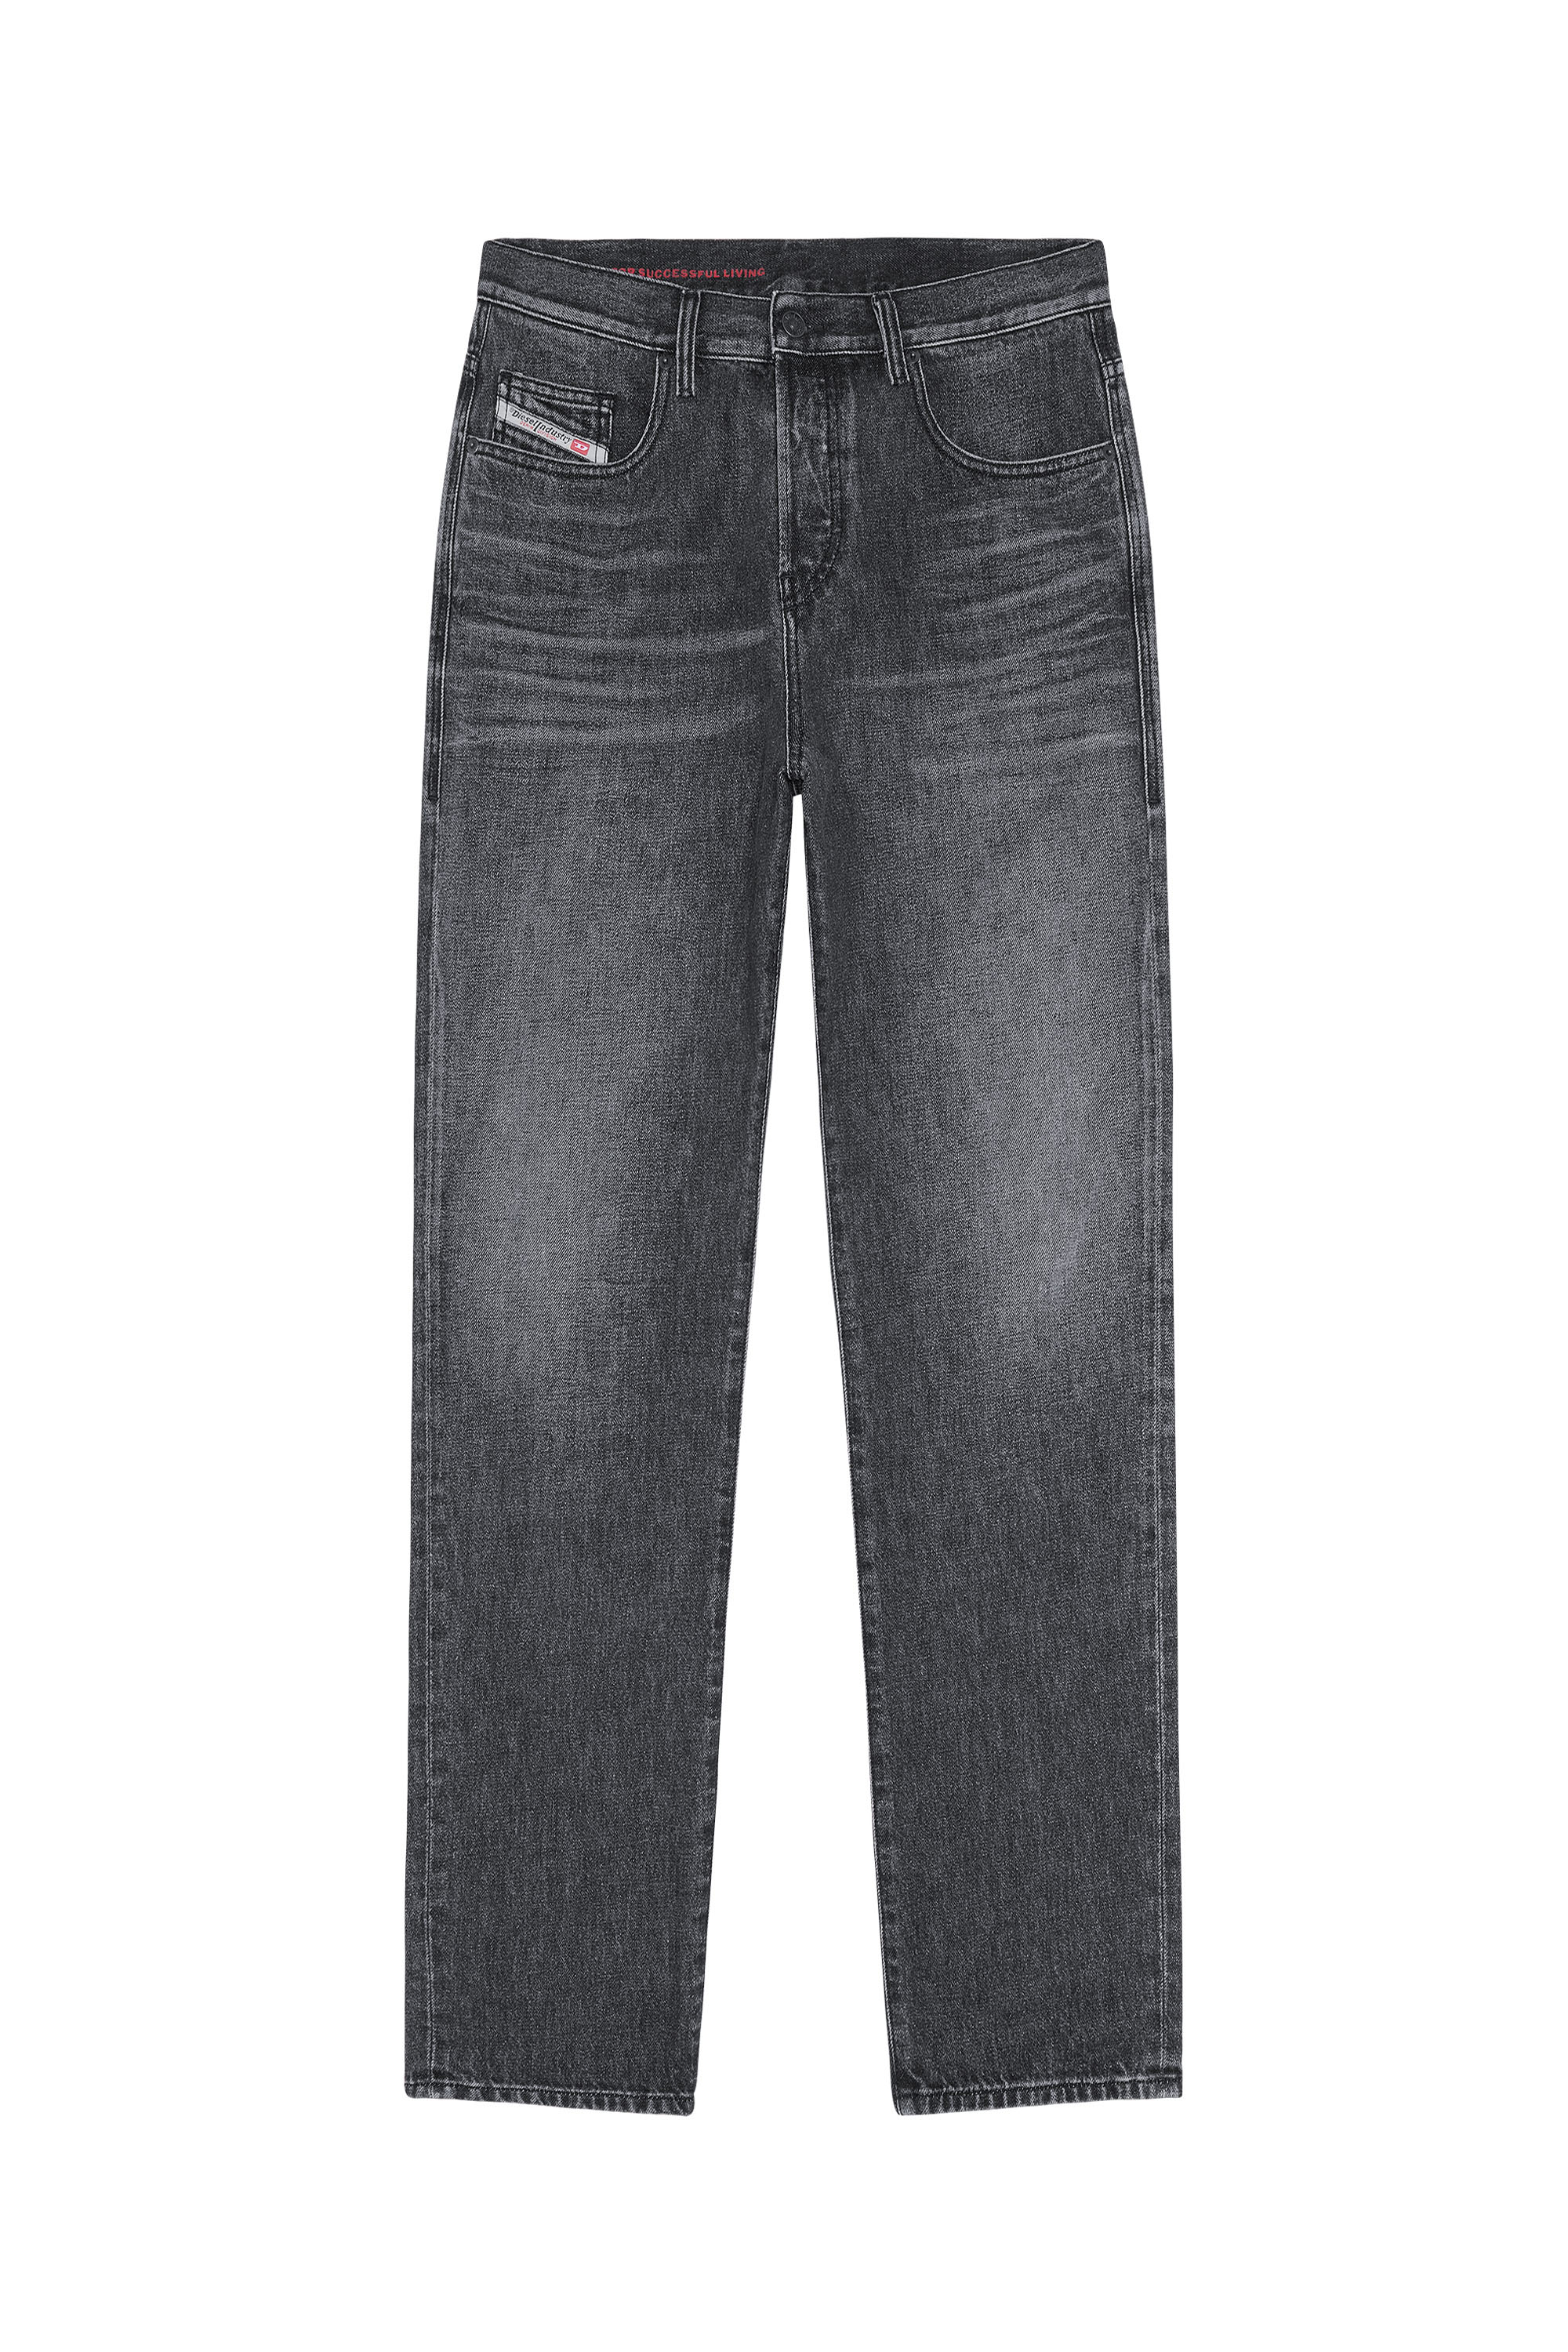 2020 D-VIKER 007C4 Straight Jeans, Black/Dark grey - Jeans